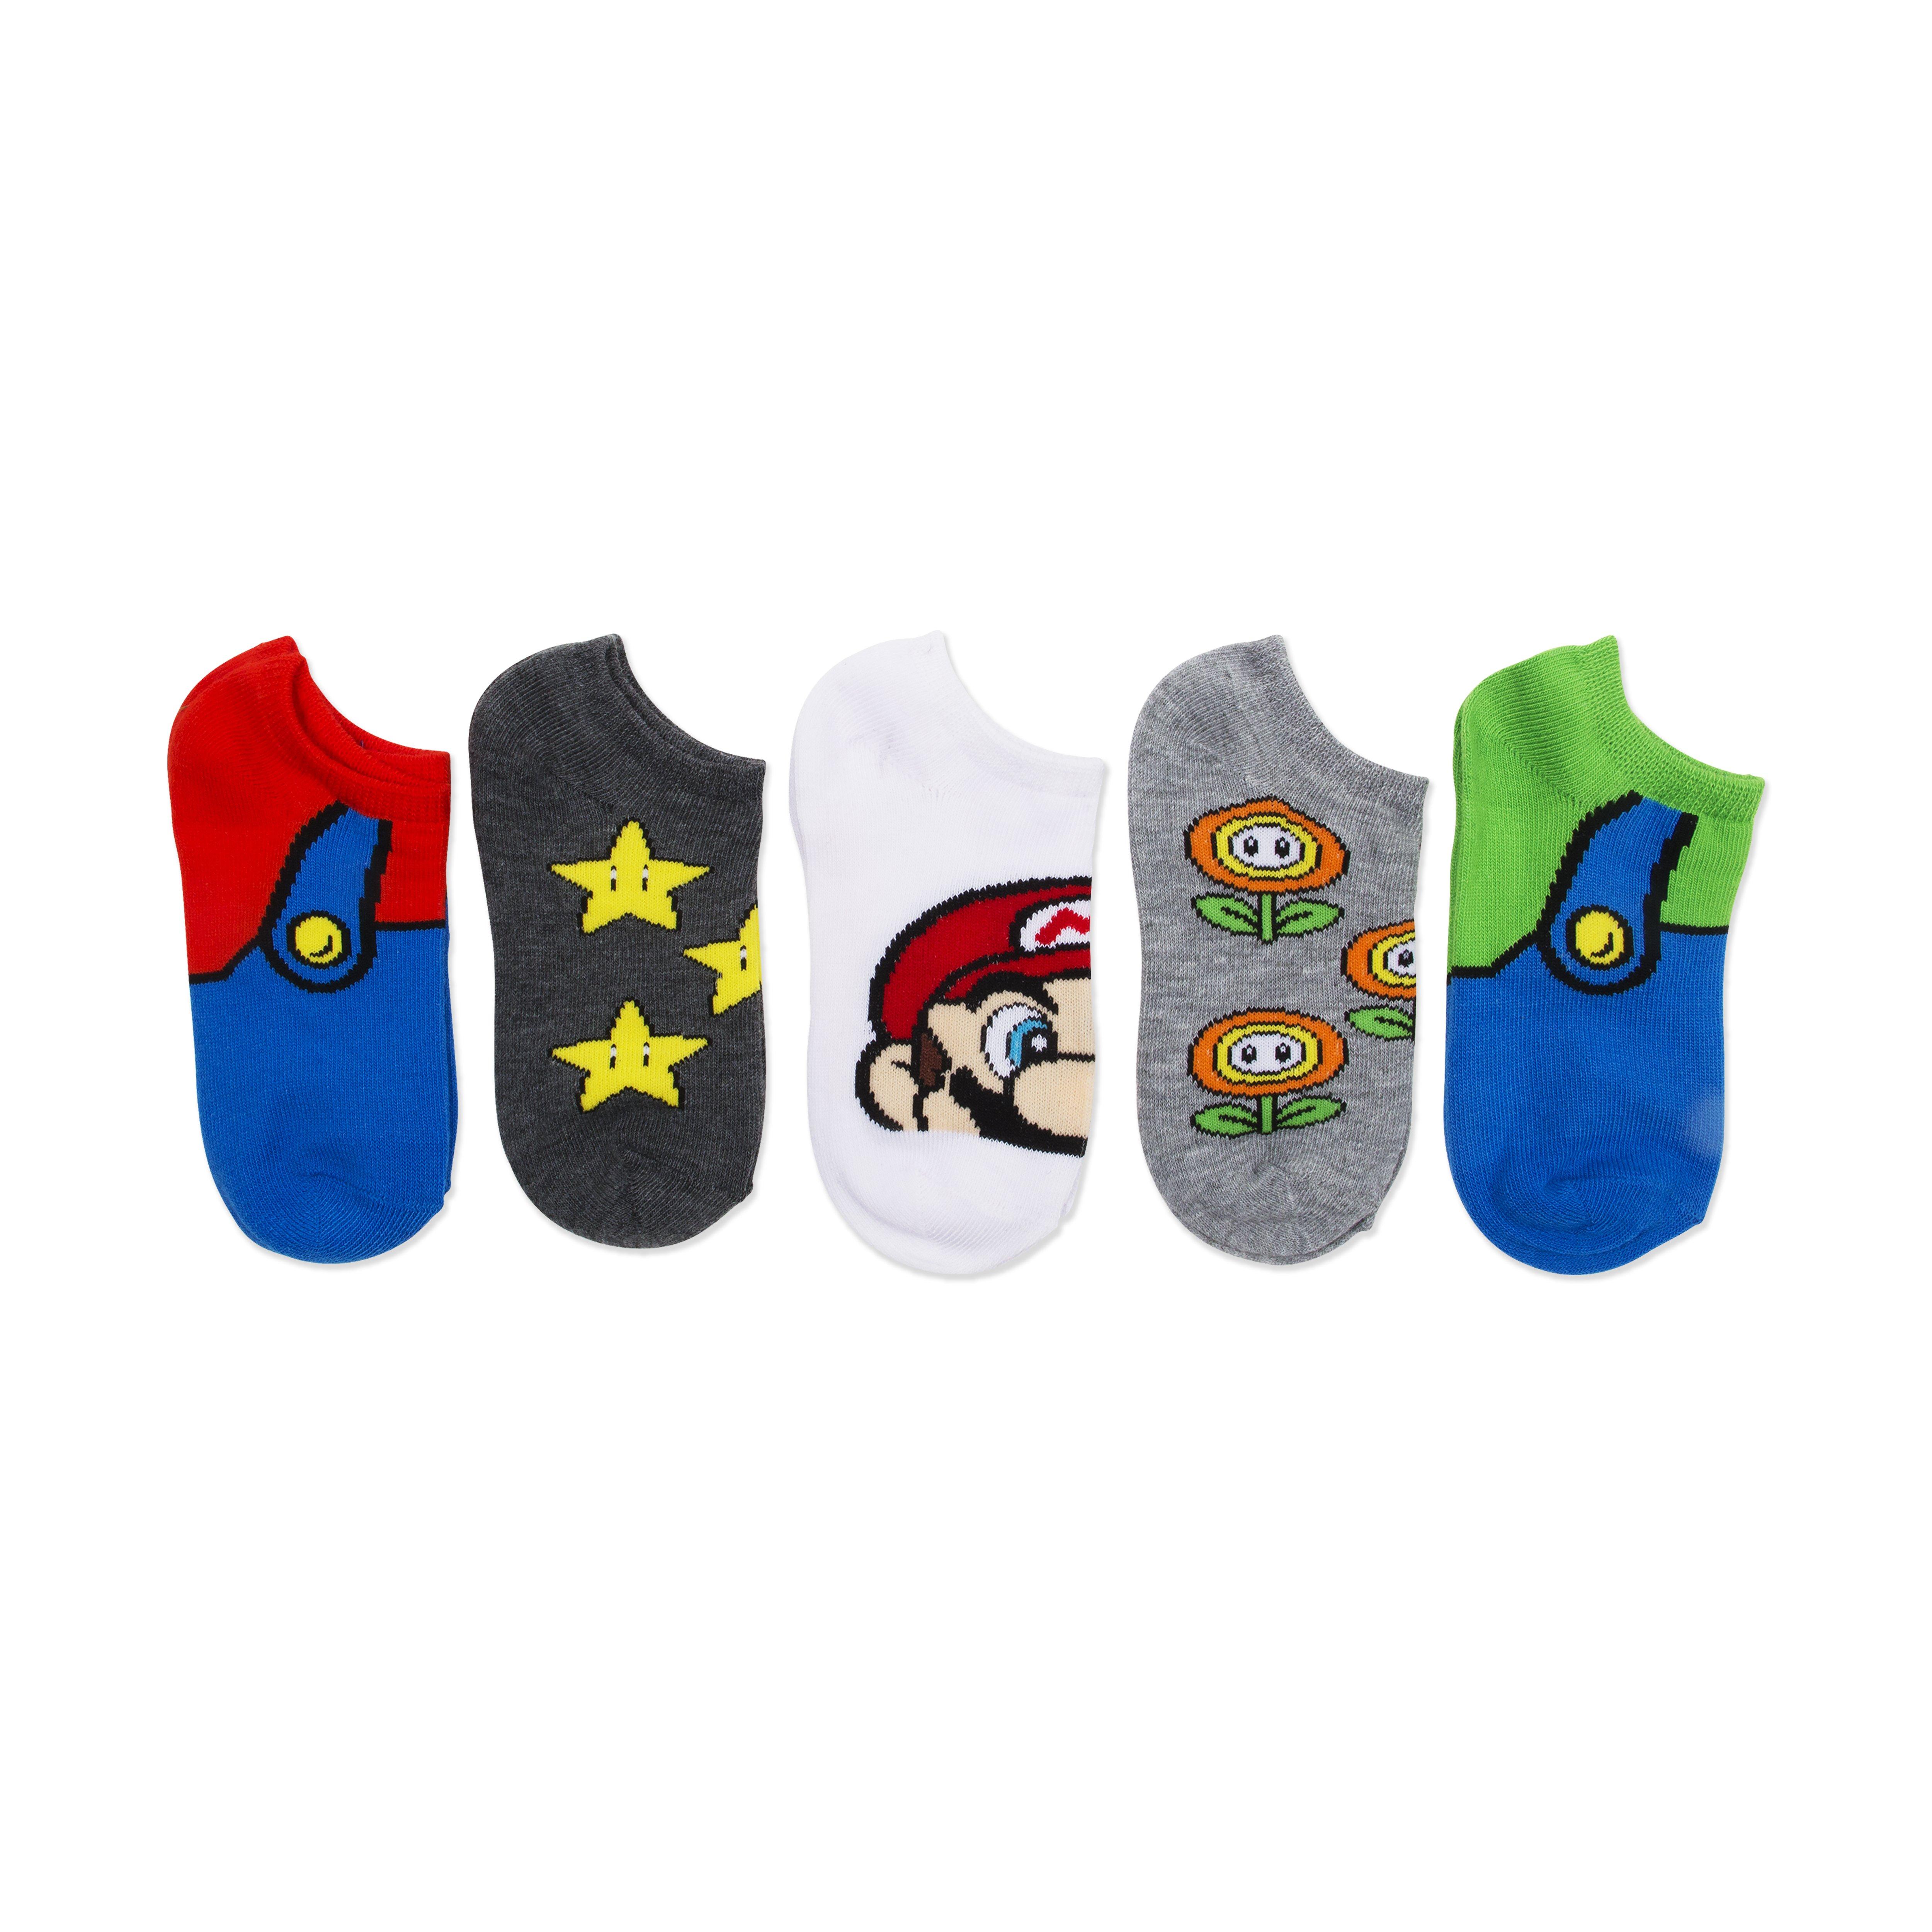 Super Mario Bros. Socks 5 Pack